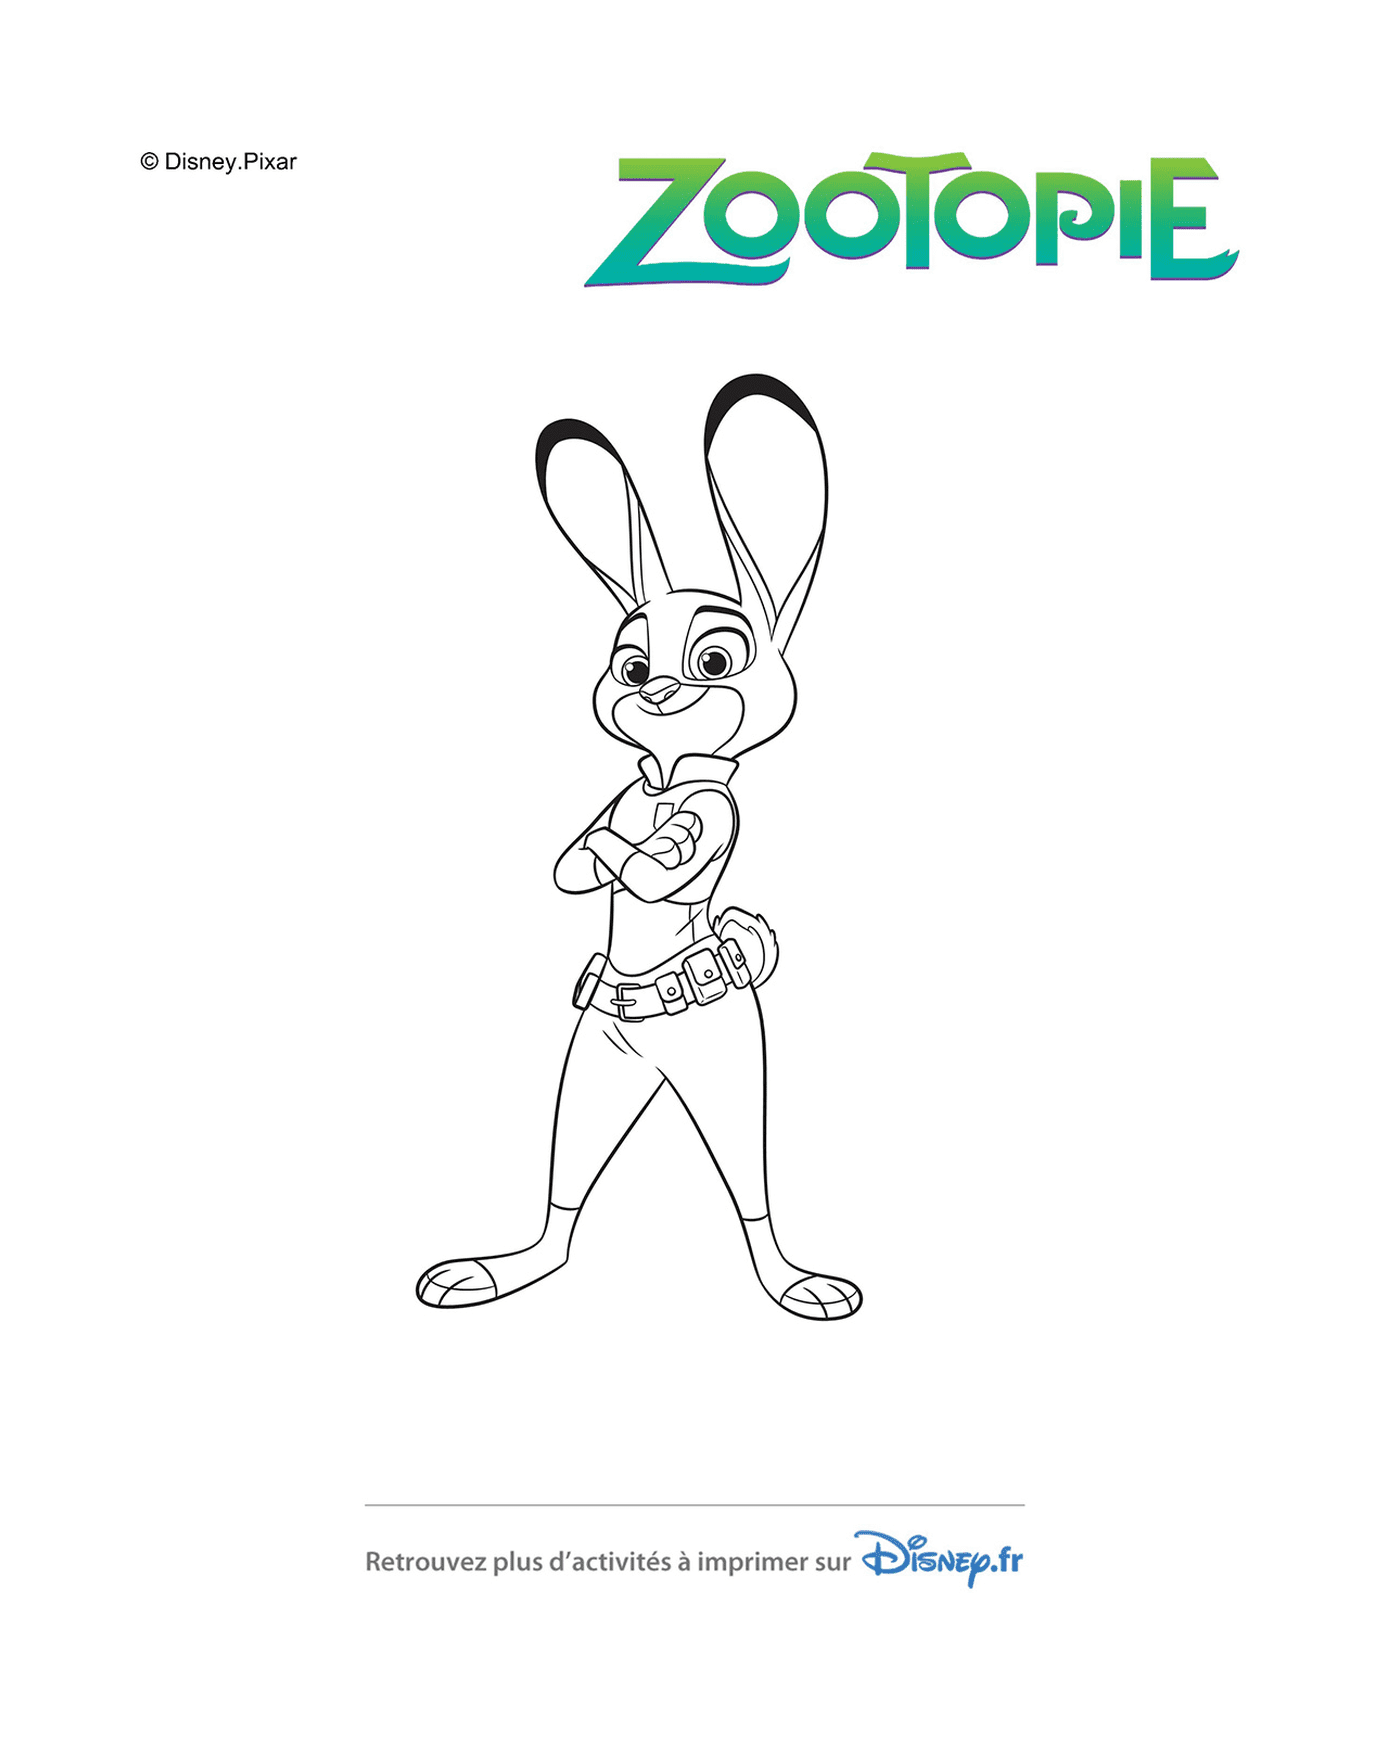  Judy Hopps, l'intrepida polizia di Disney Zootopie 